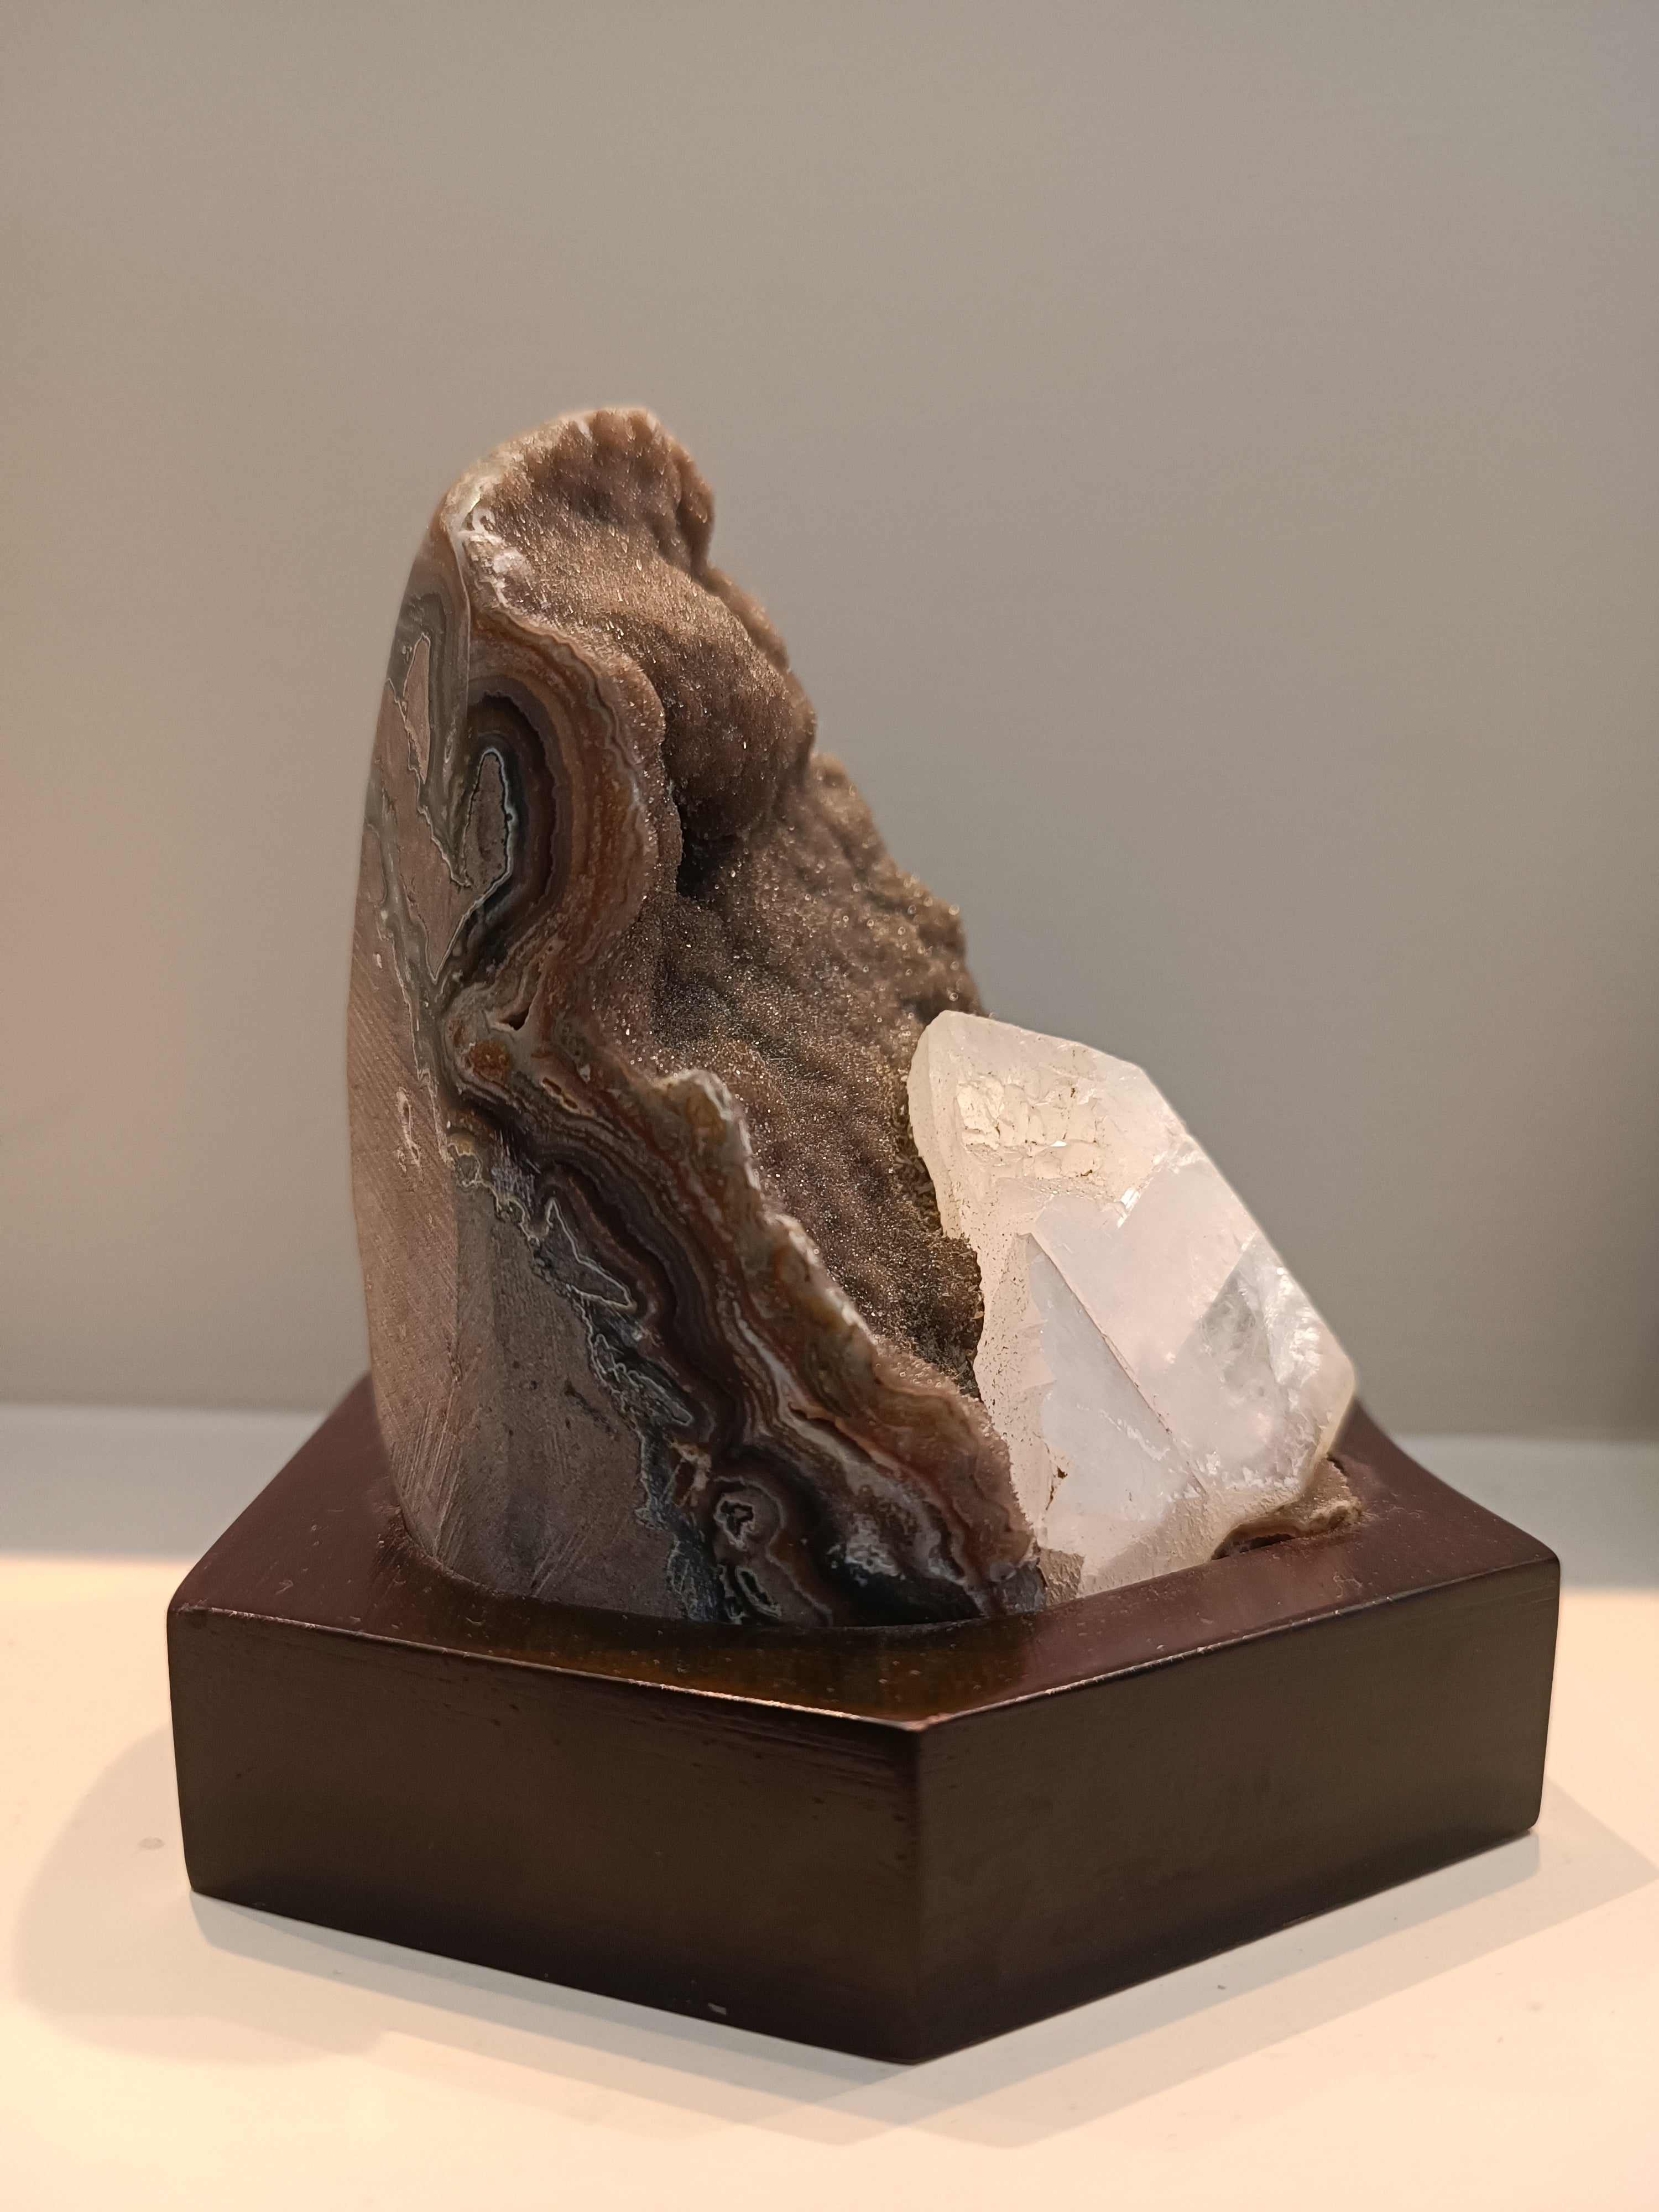 Natural Amethyst Geode